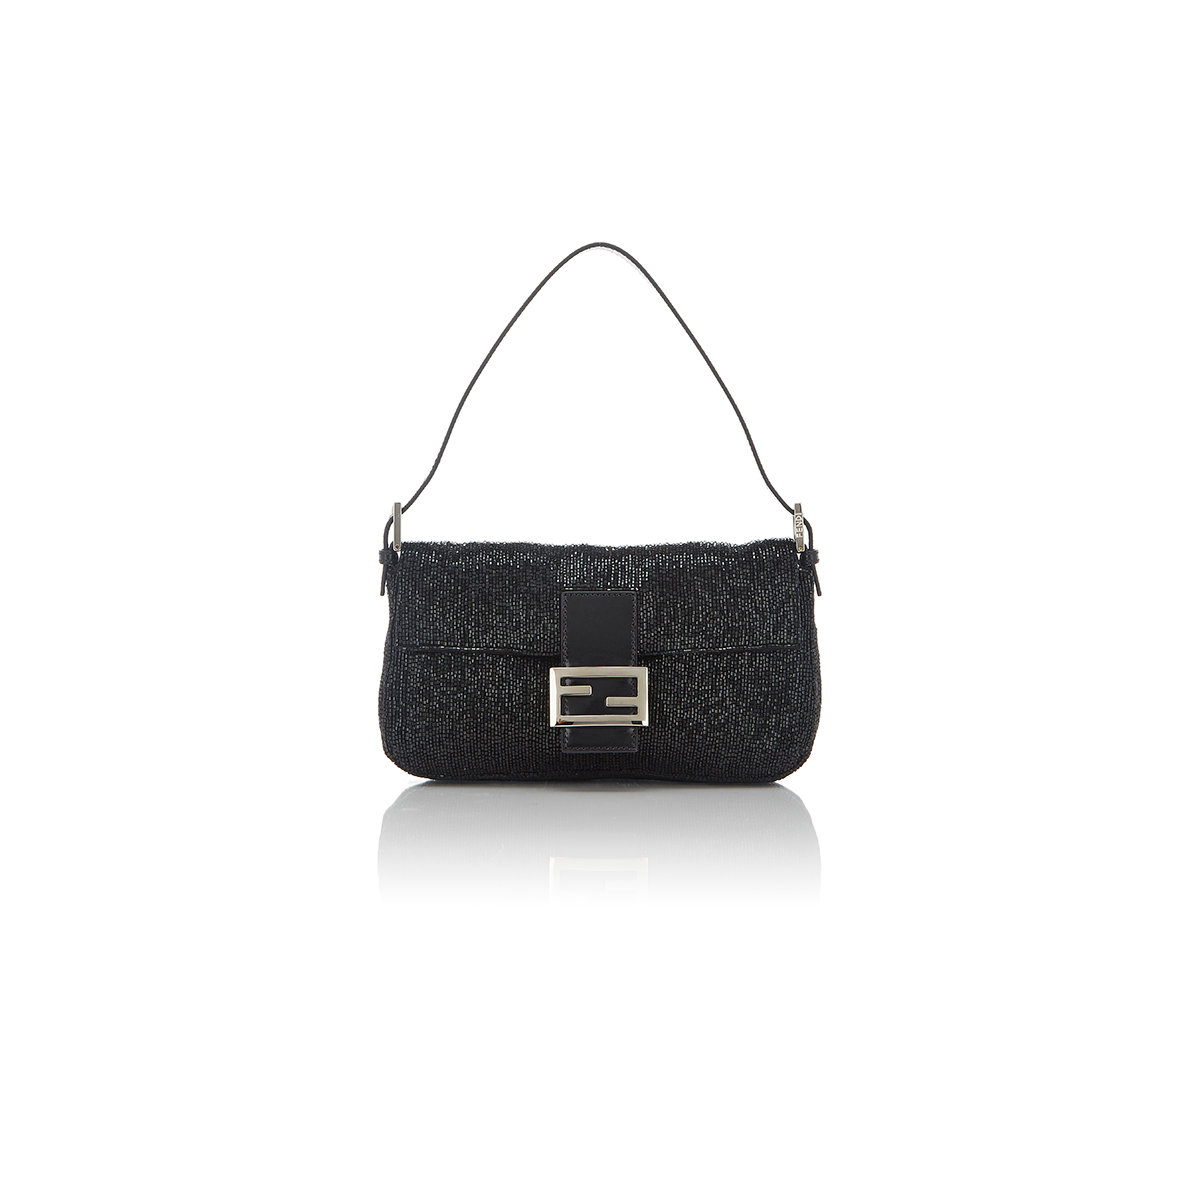 Fendi Beaded Baguette Bag in Black - Lyst